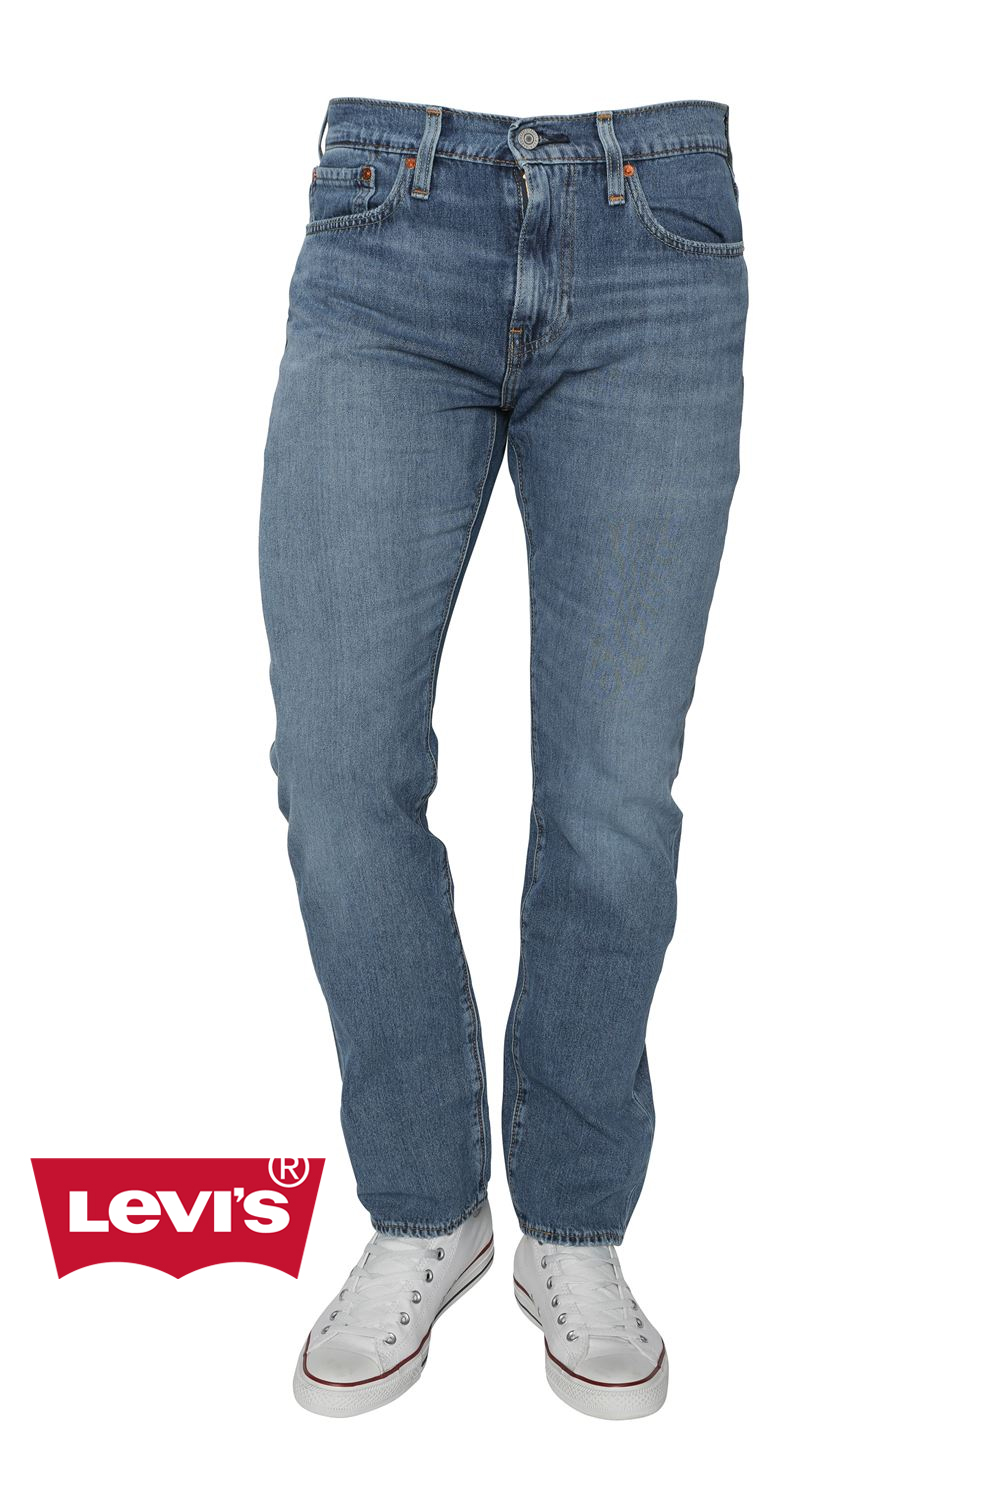 502 regular taper levis jeans